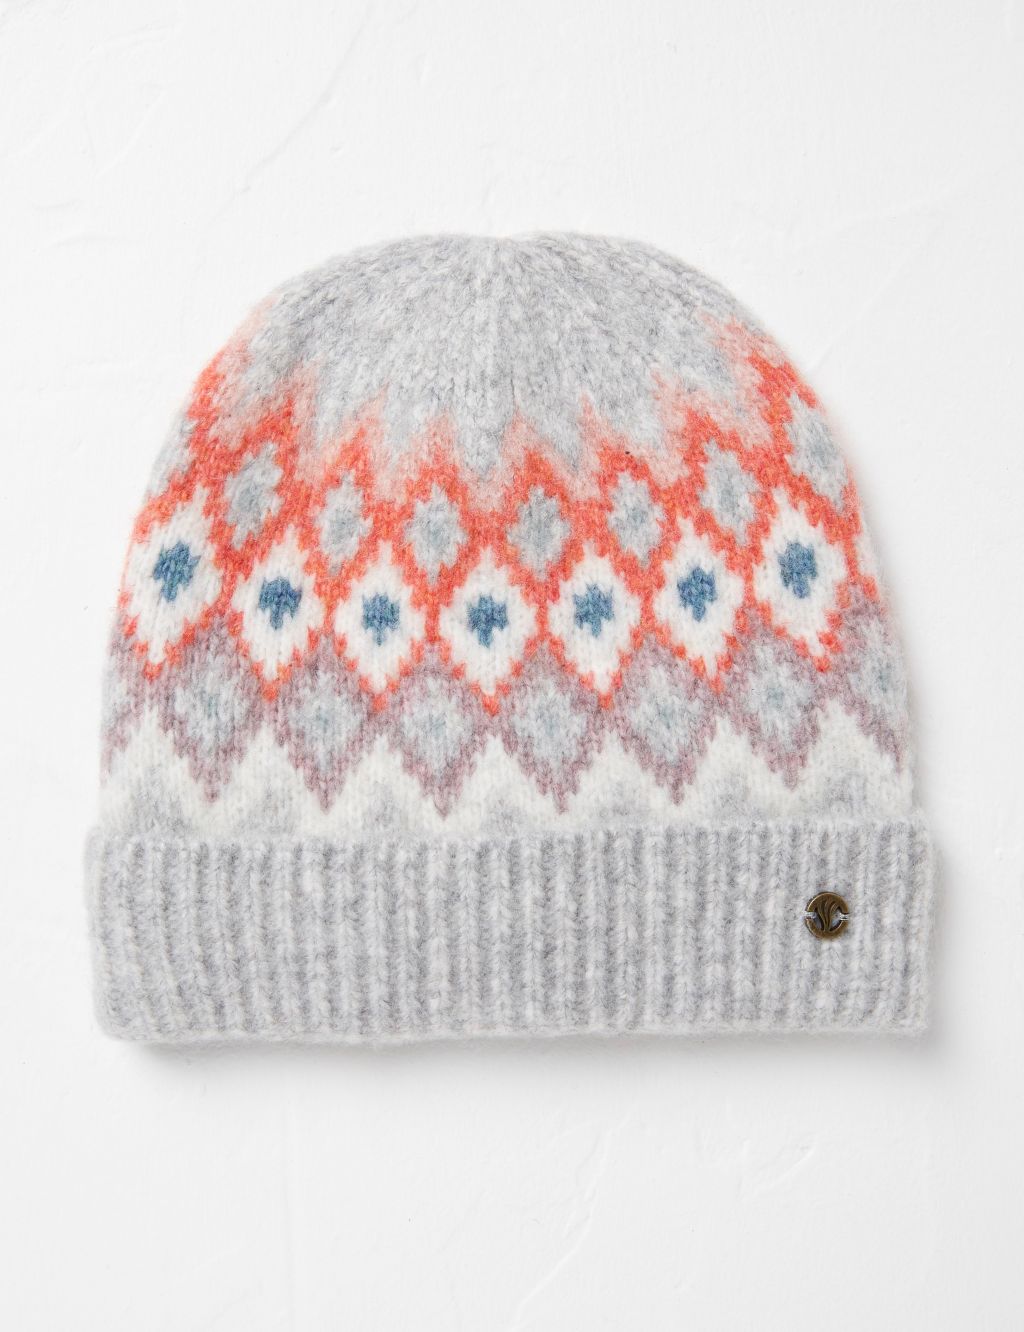 Knitted Fair Isle Beanie Hat with Wool